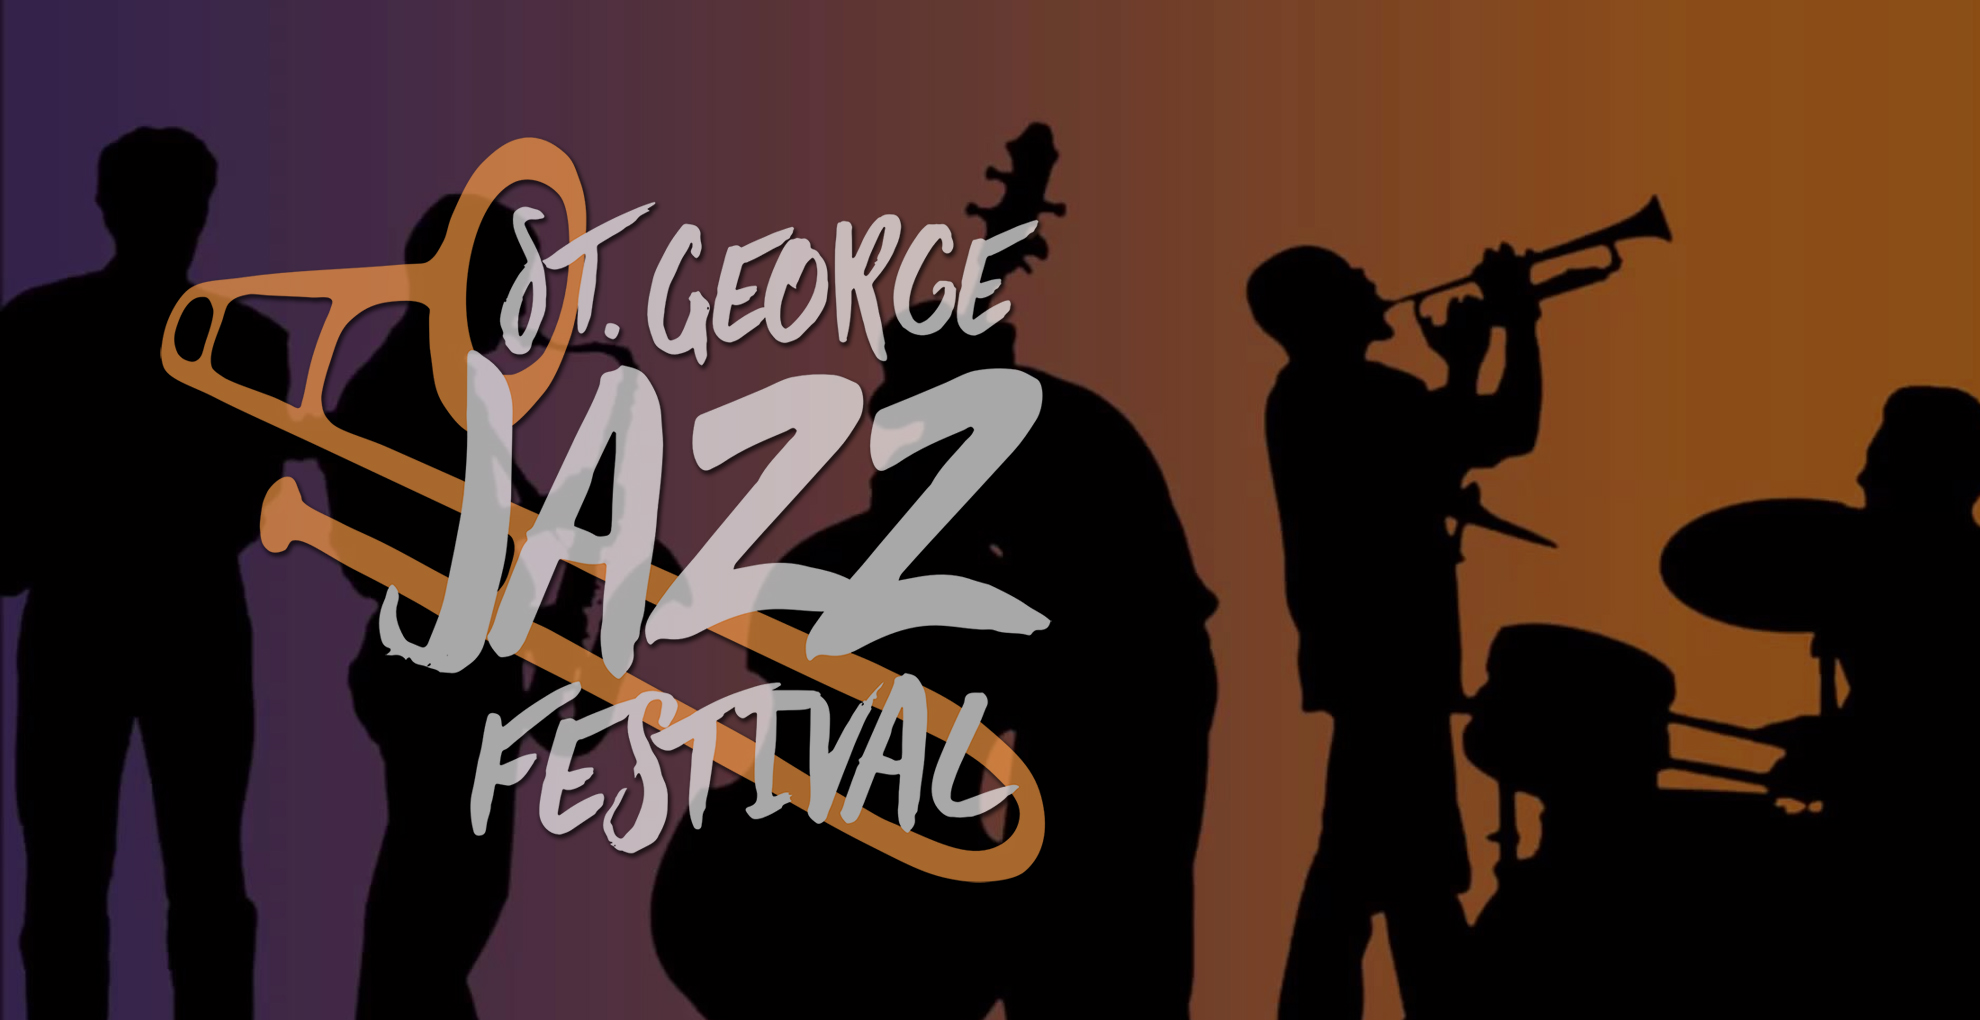 St George Jazz Festival